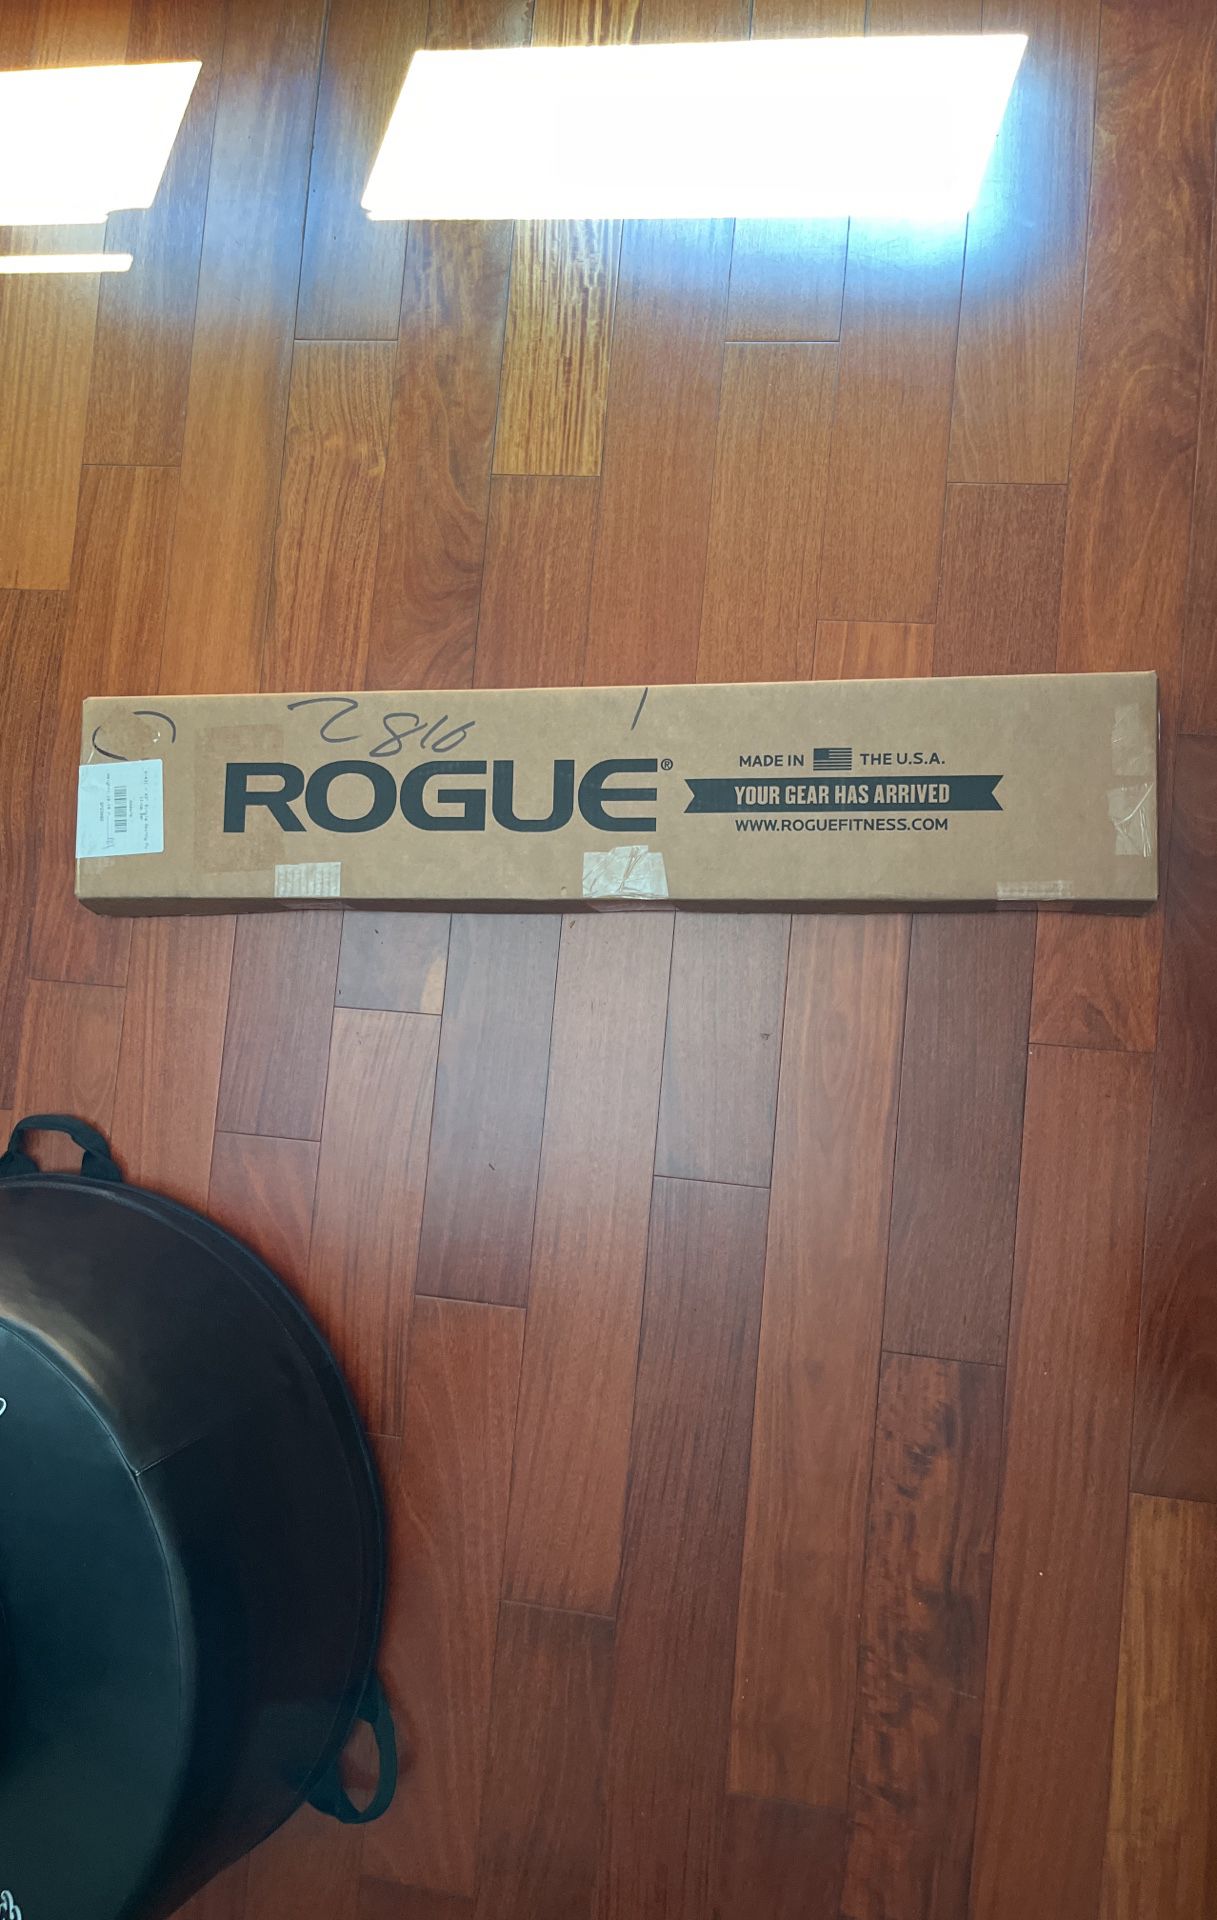 Rogue Monster Lite 1.25" Pull-up Bar